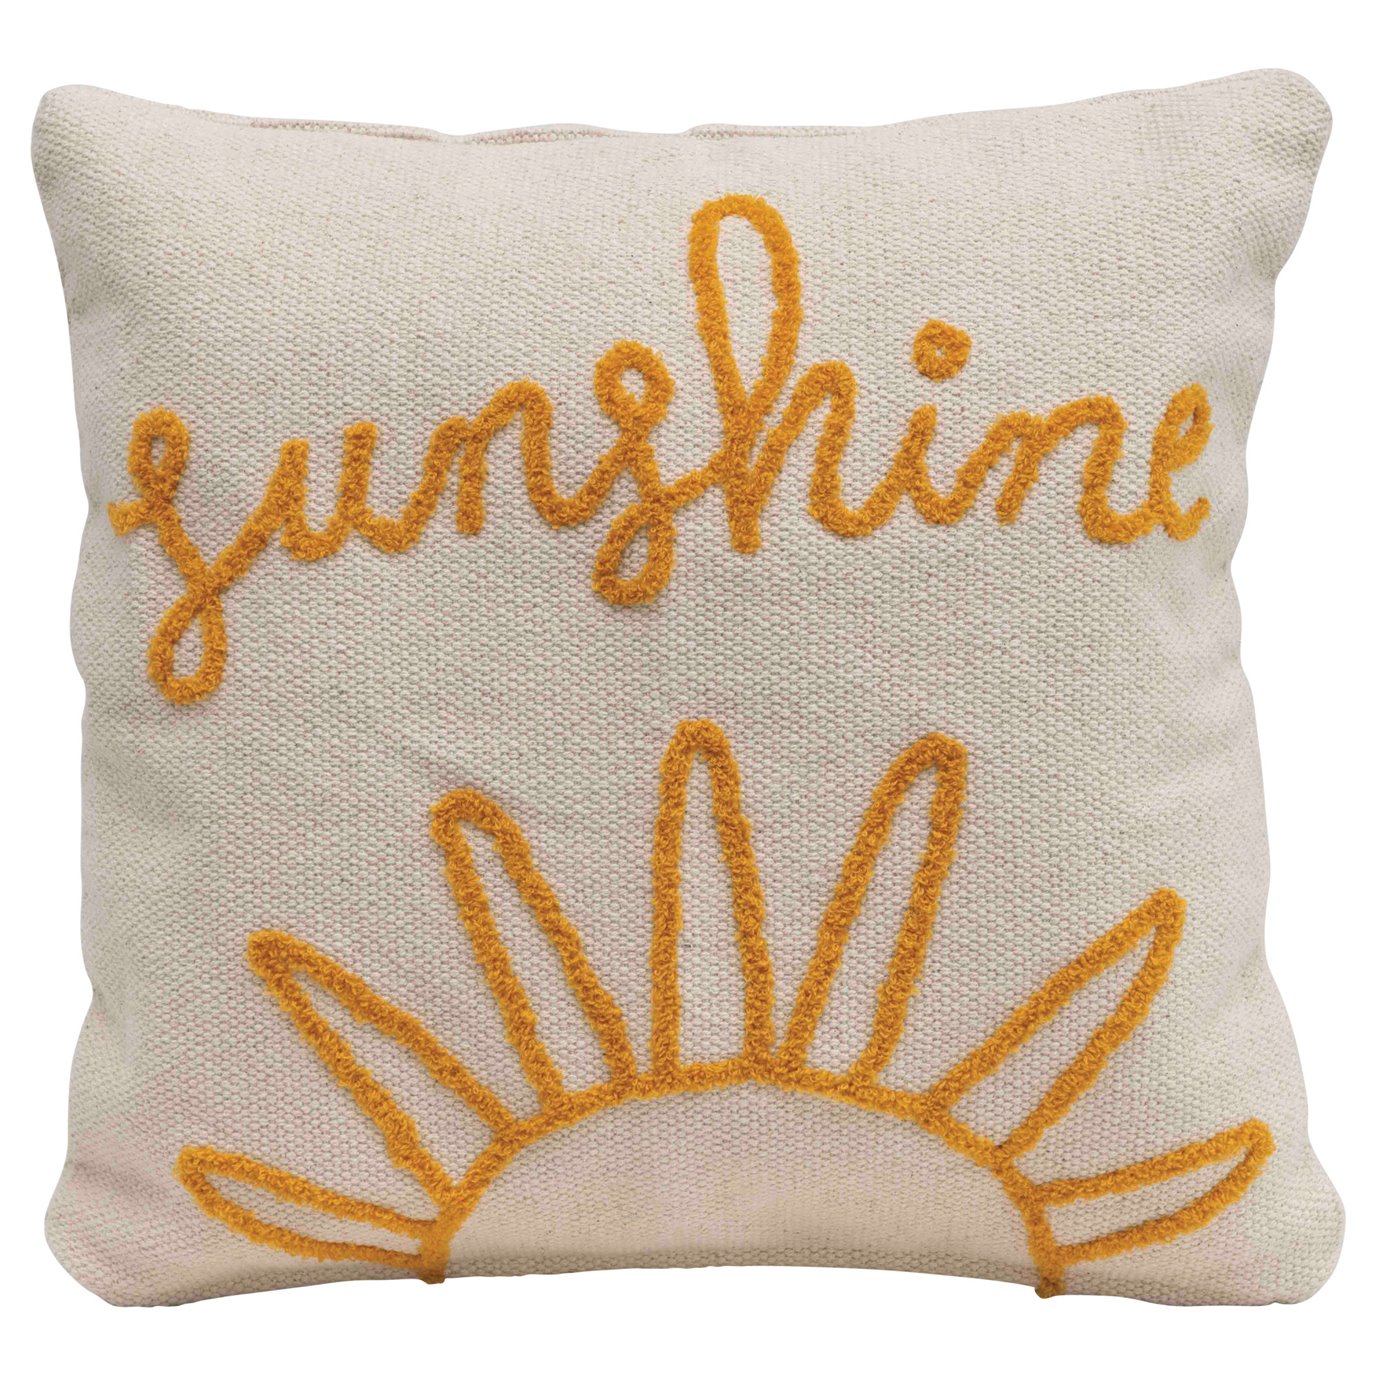 "Sunshine" Embroidered Square Cotton Pillow